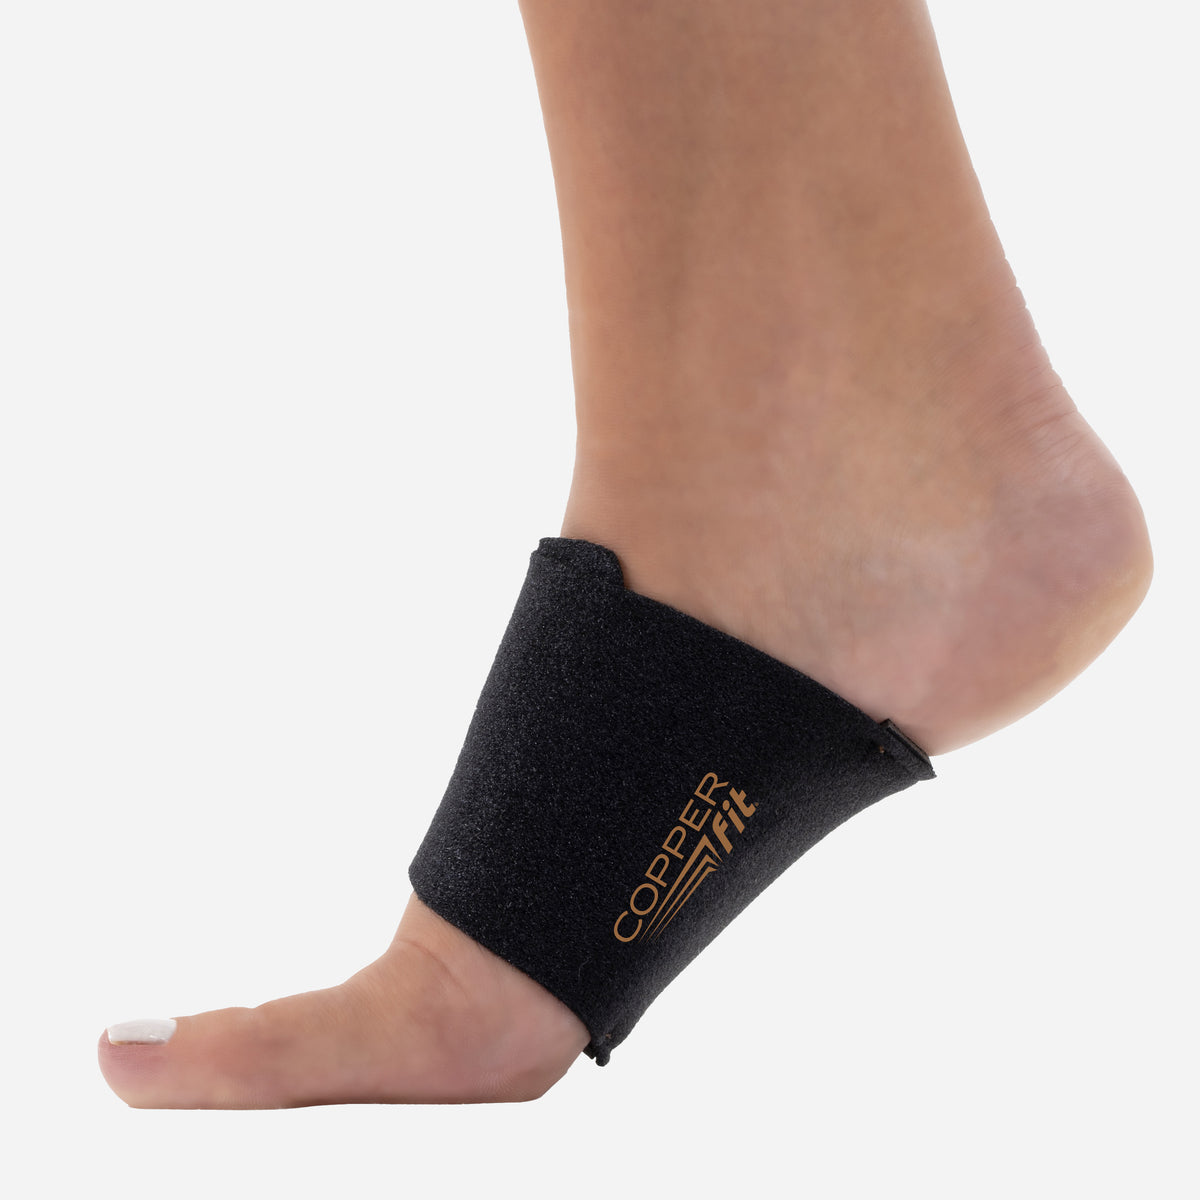 Copper Fit Ice Compression Socks Menthol Infused Black S/M